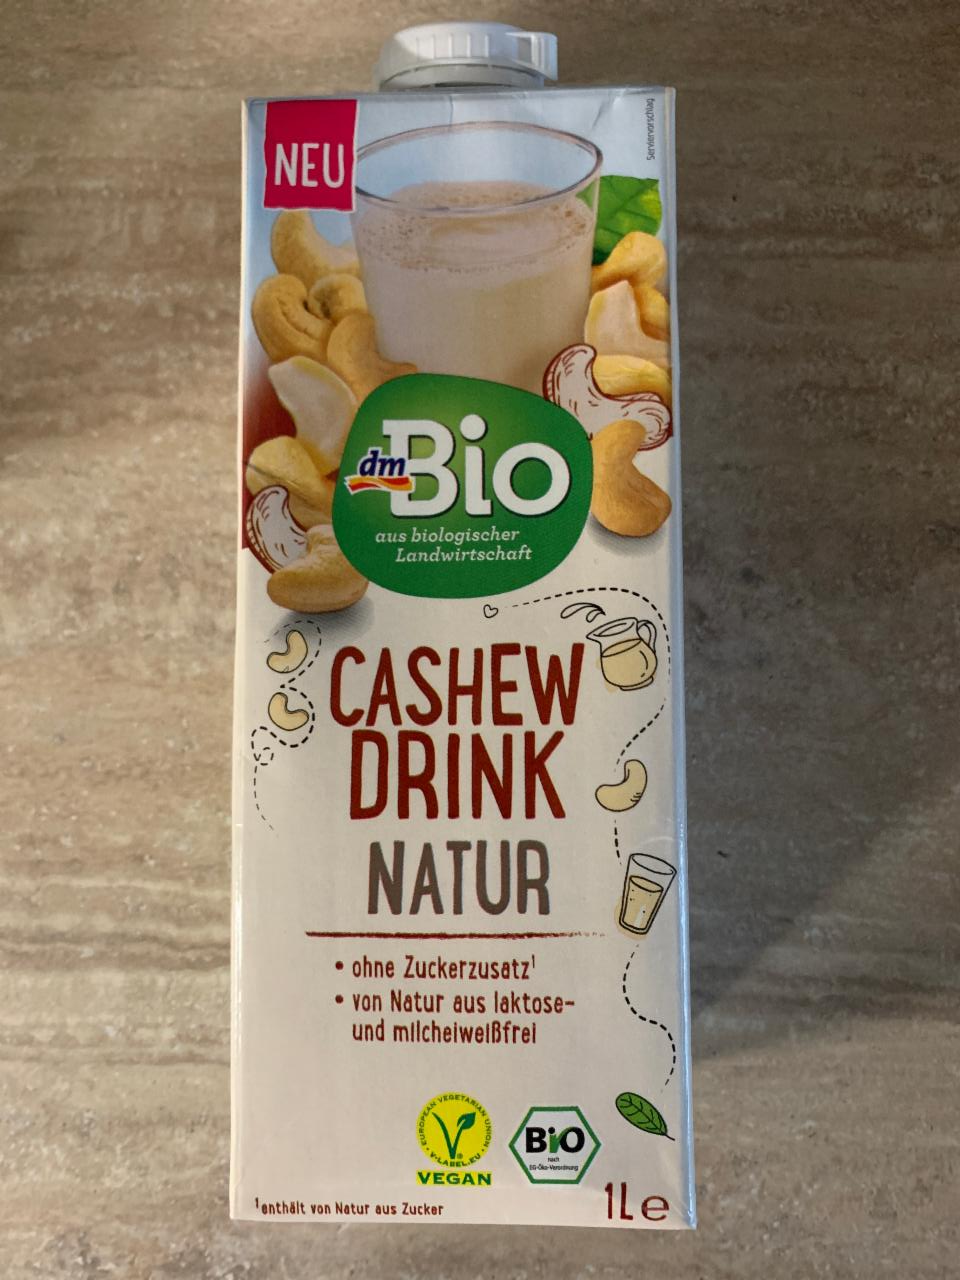 Fotografie - Cashew drink natur dmBio